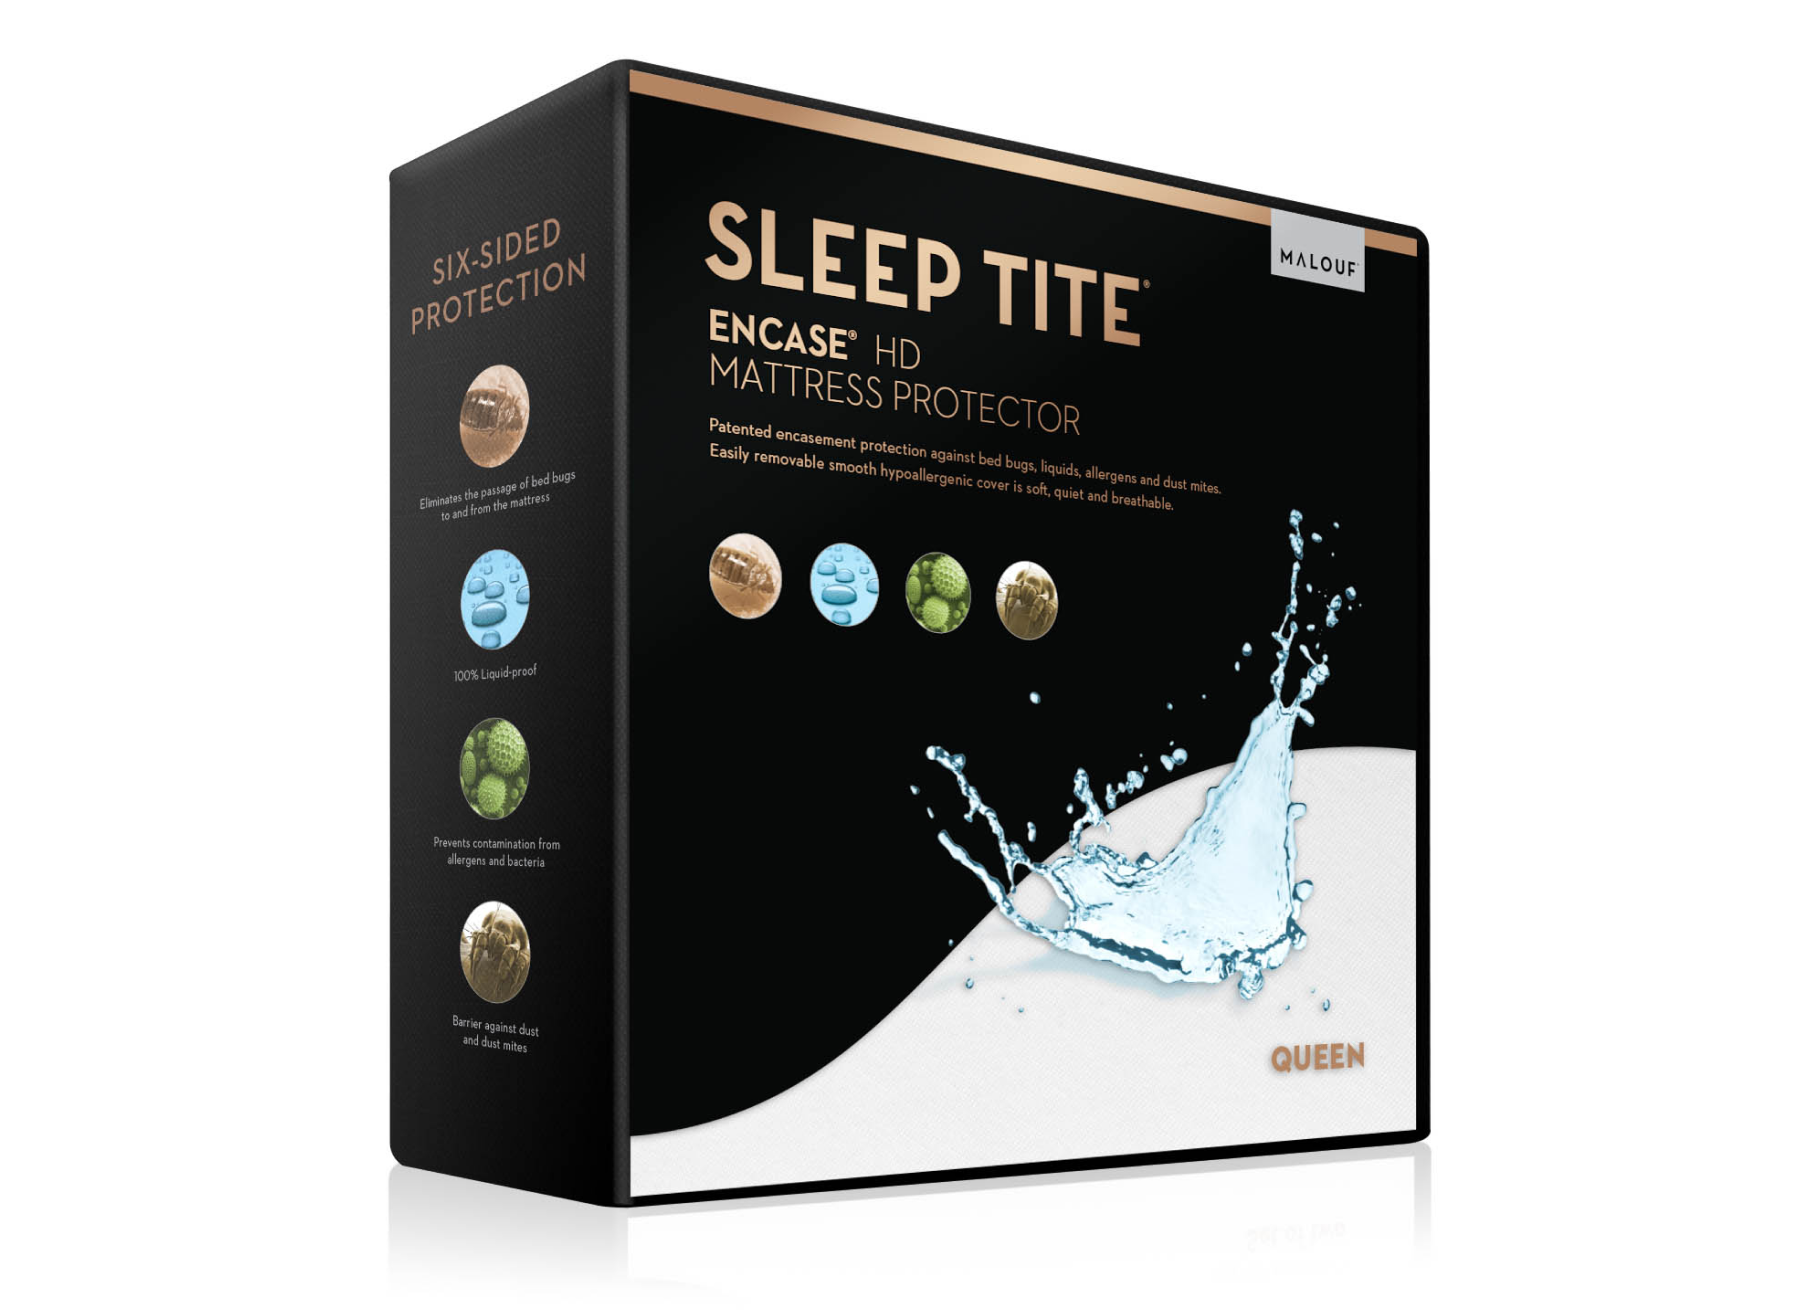 Encase HD mattress protector in Sleep Tite packaging - Mattress King